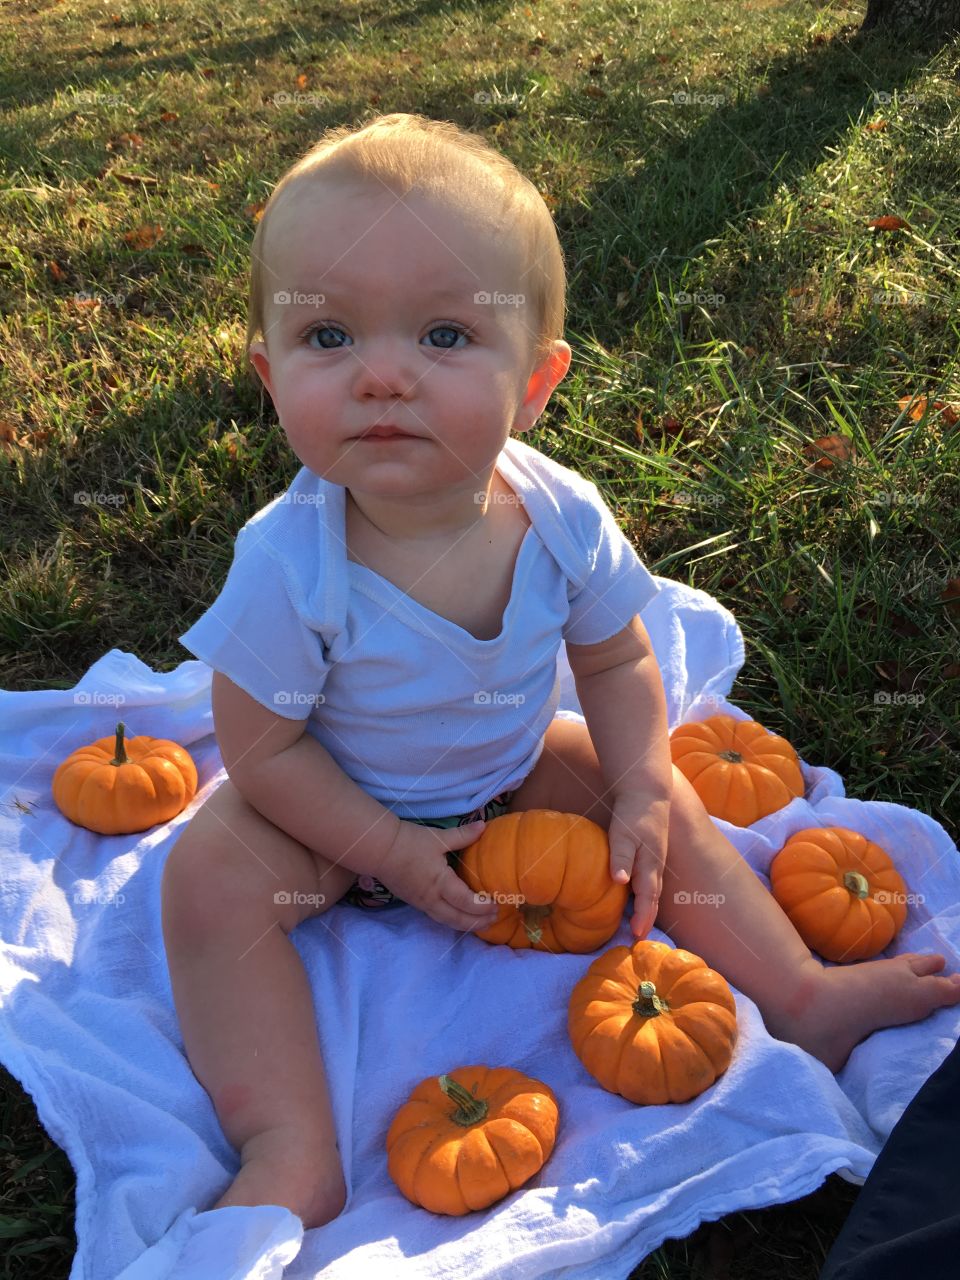 Baby sitting on blanket holding pumpkins